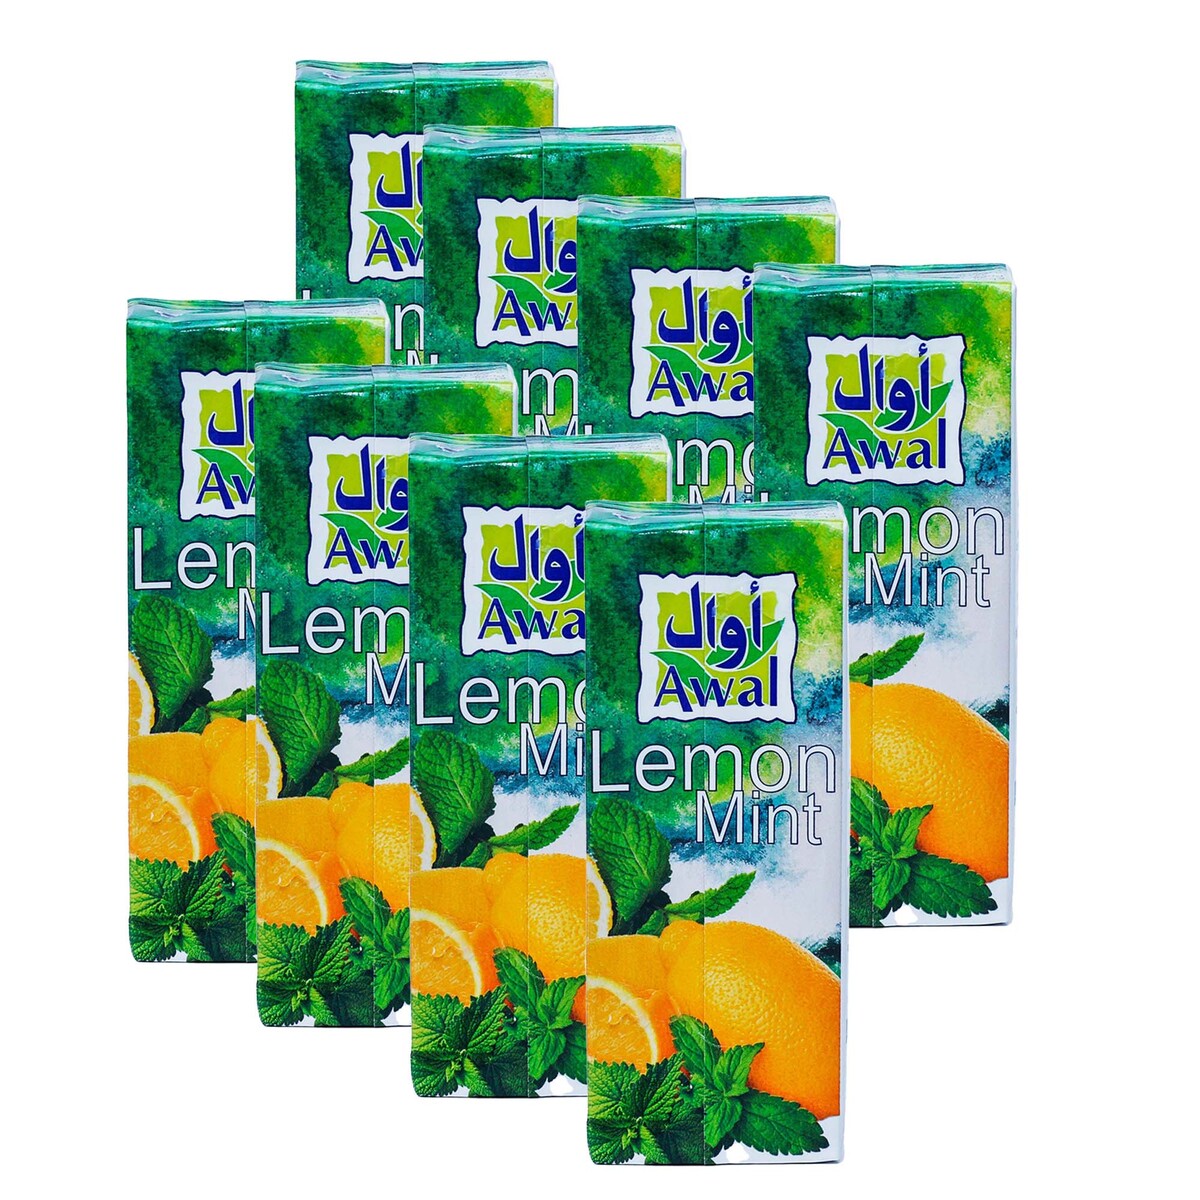 Awal Drink Lemon Mint 6 x 200ml